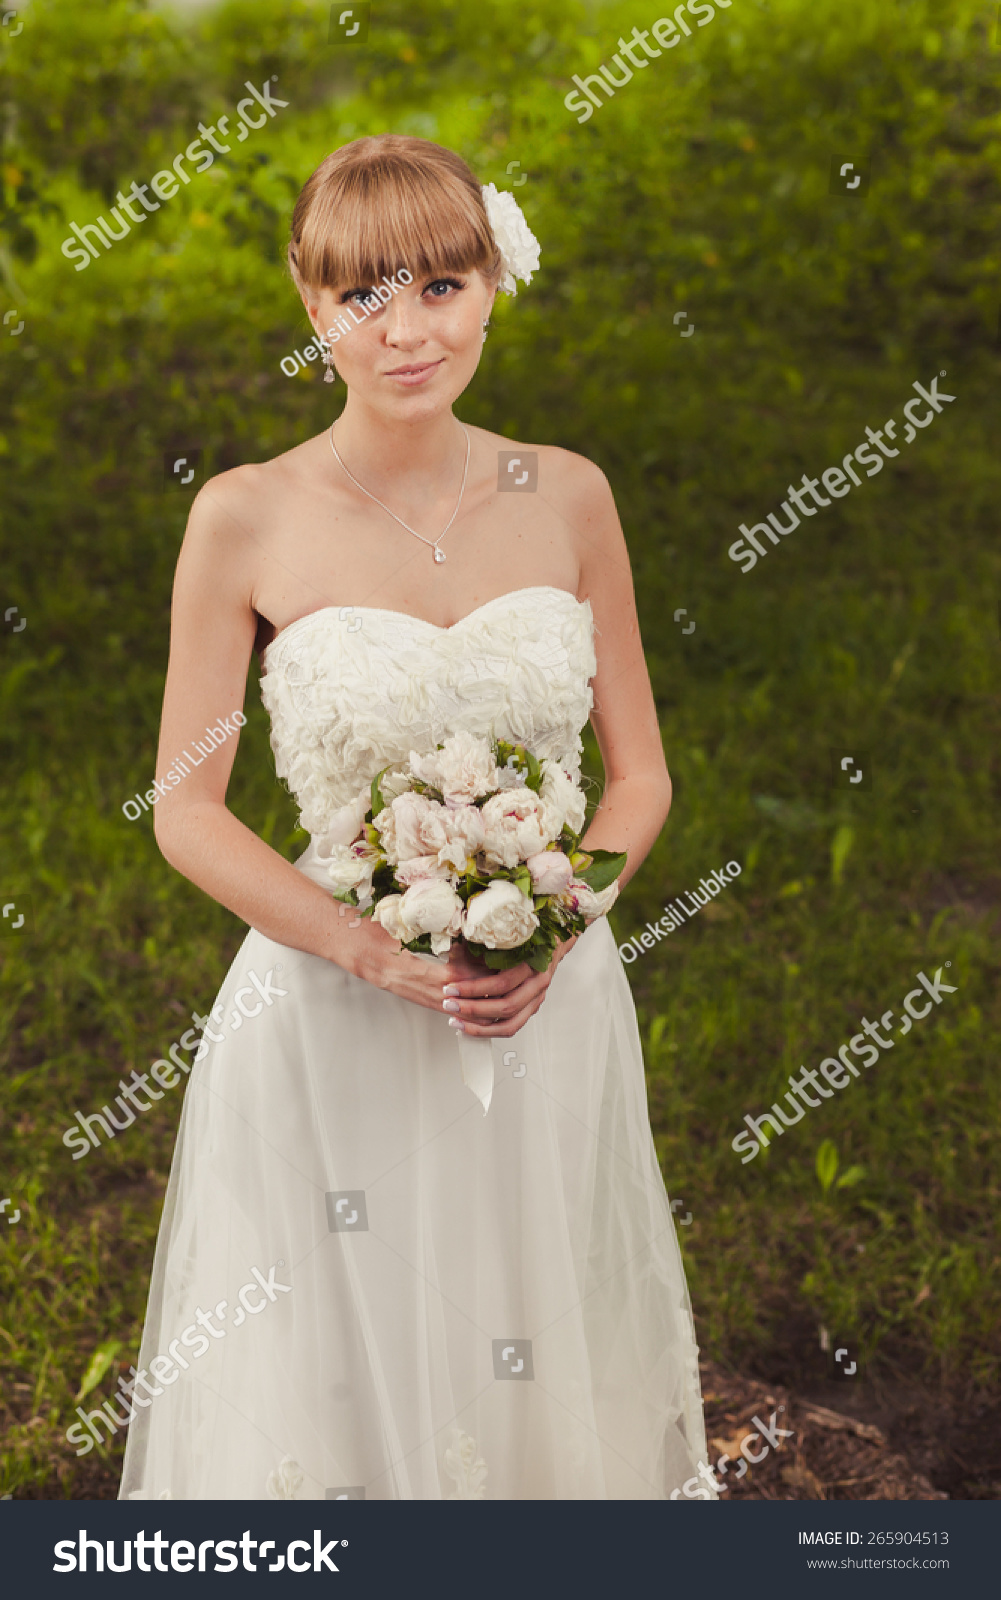 Beautiful Bride Photos Shutterstock 100